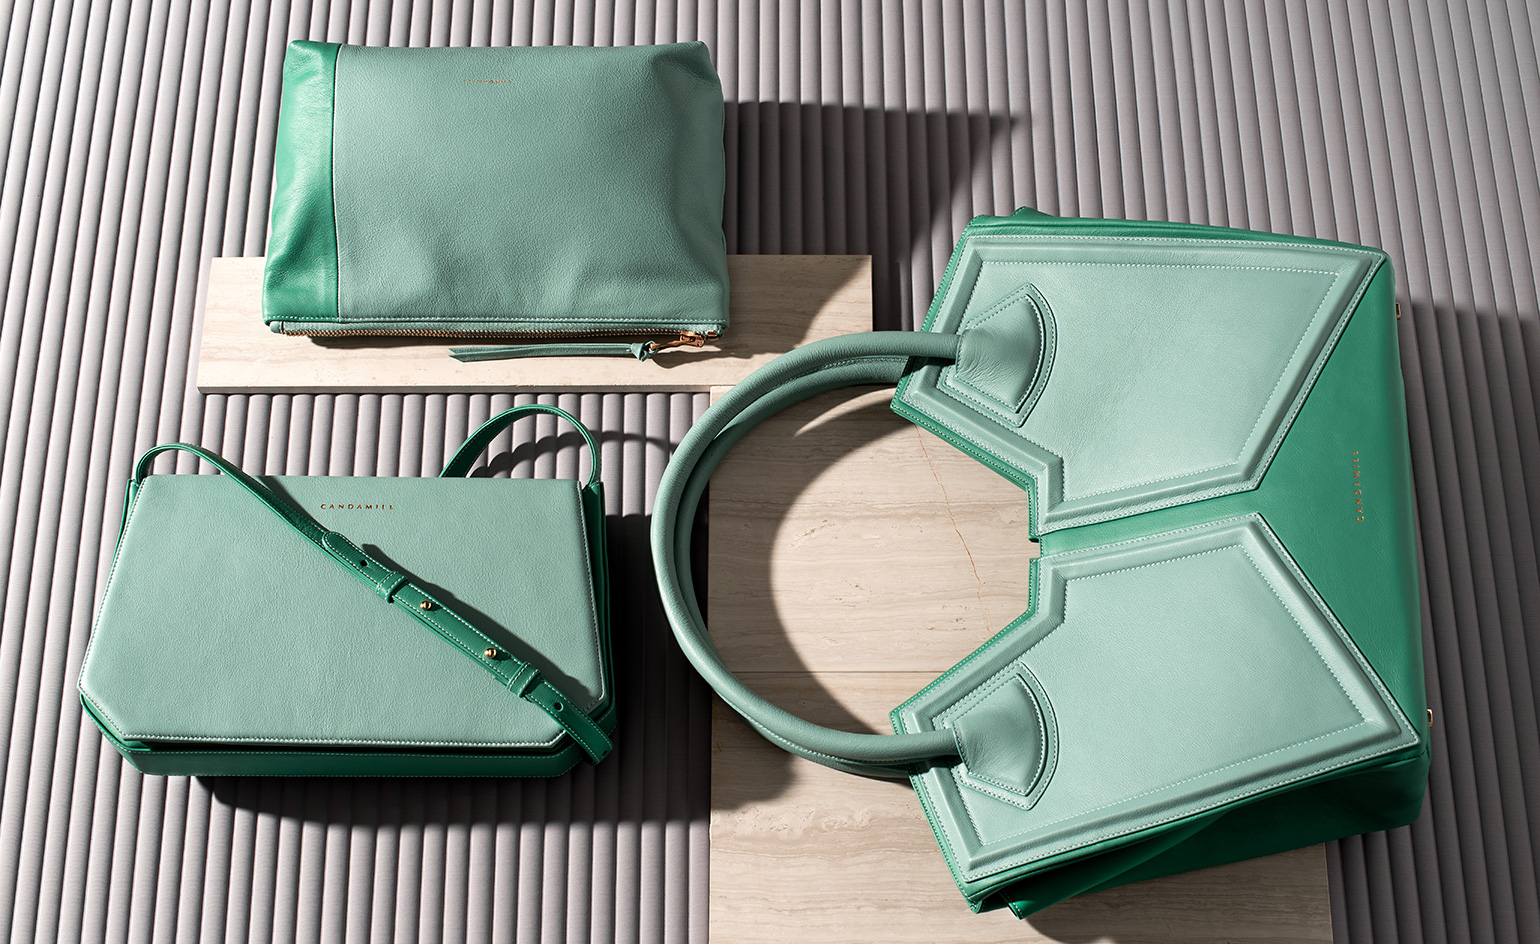 Candamill's luxurious new handbag collection | Wallpaper